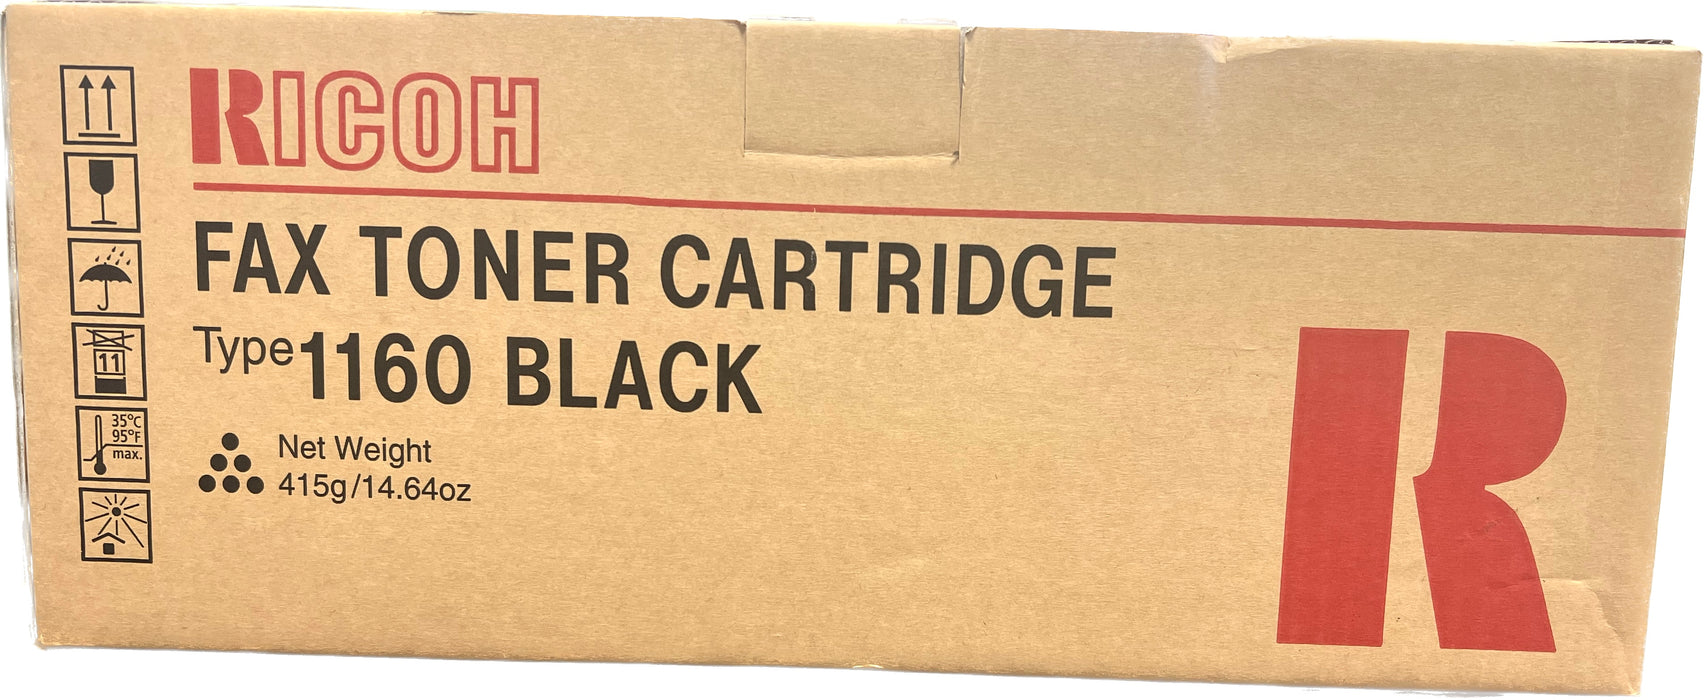 Genuine Ricoh Black Fax Toner Cartridge | 430347 | Type 1160